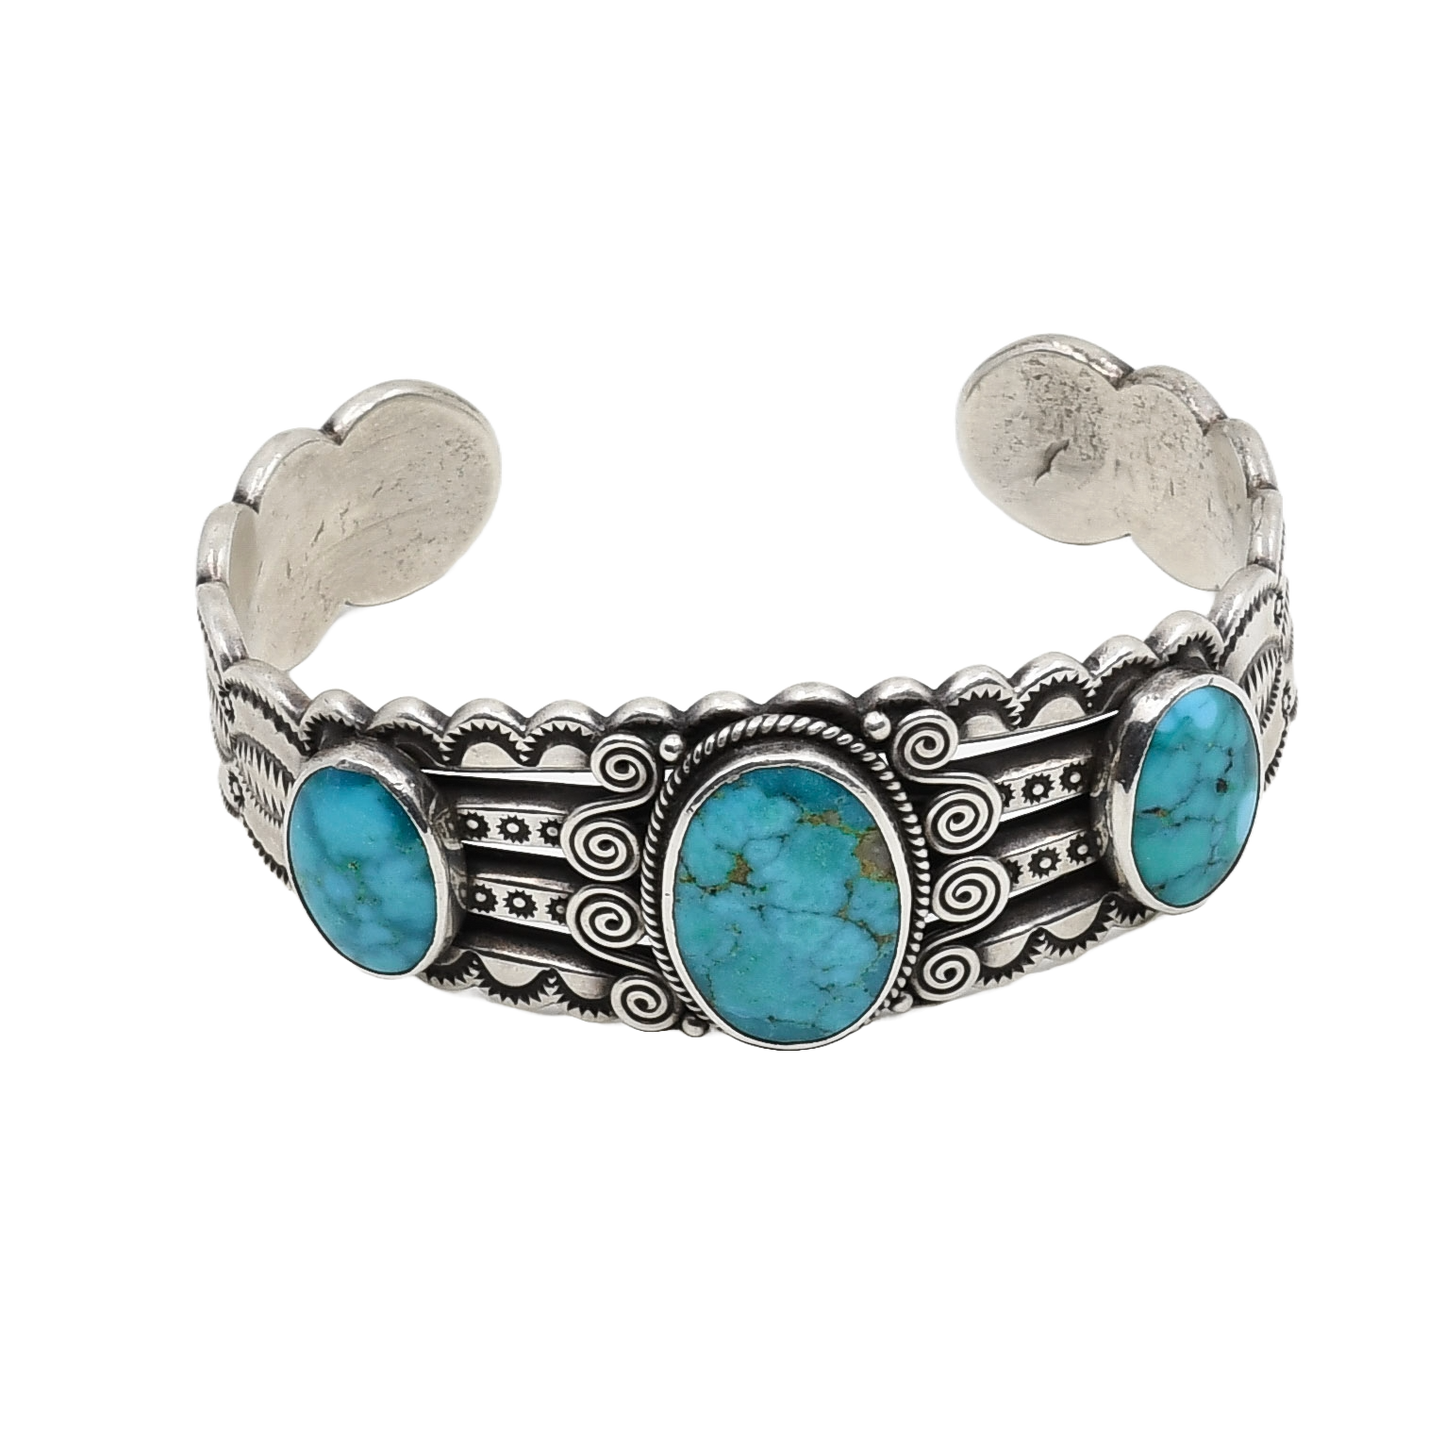 Perry Shorty Bracelet of Three Turquoise Stones